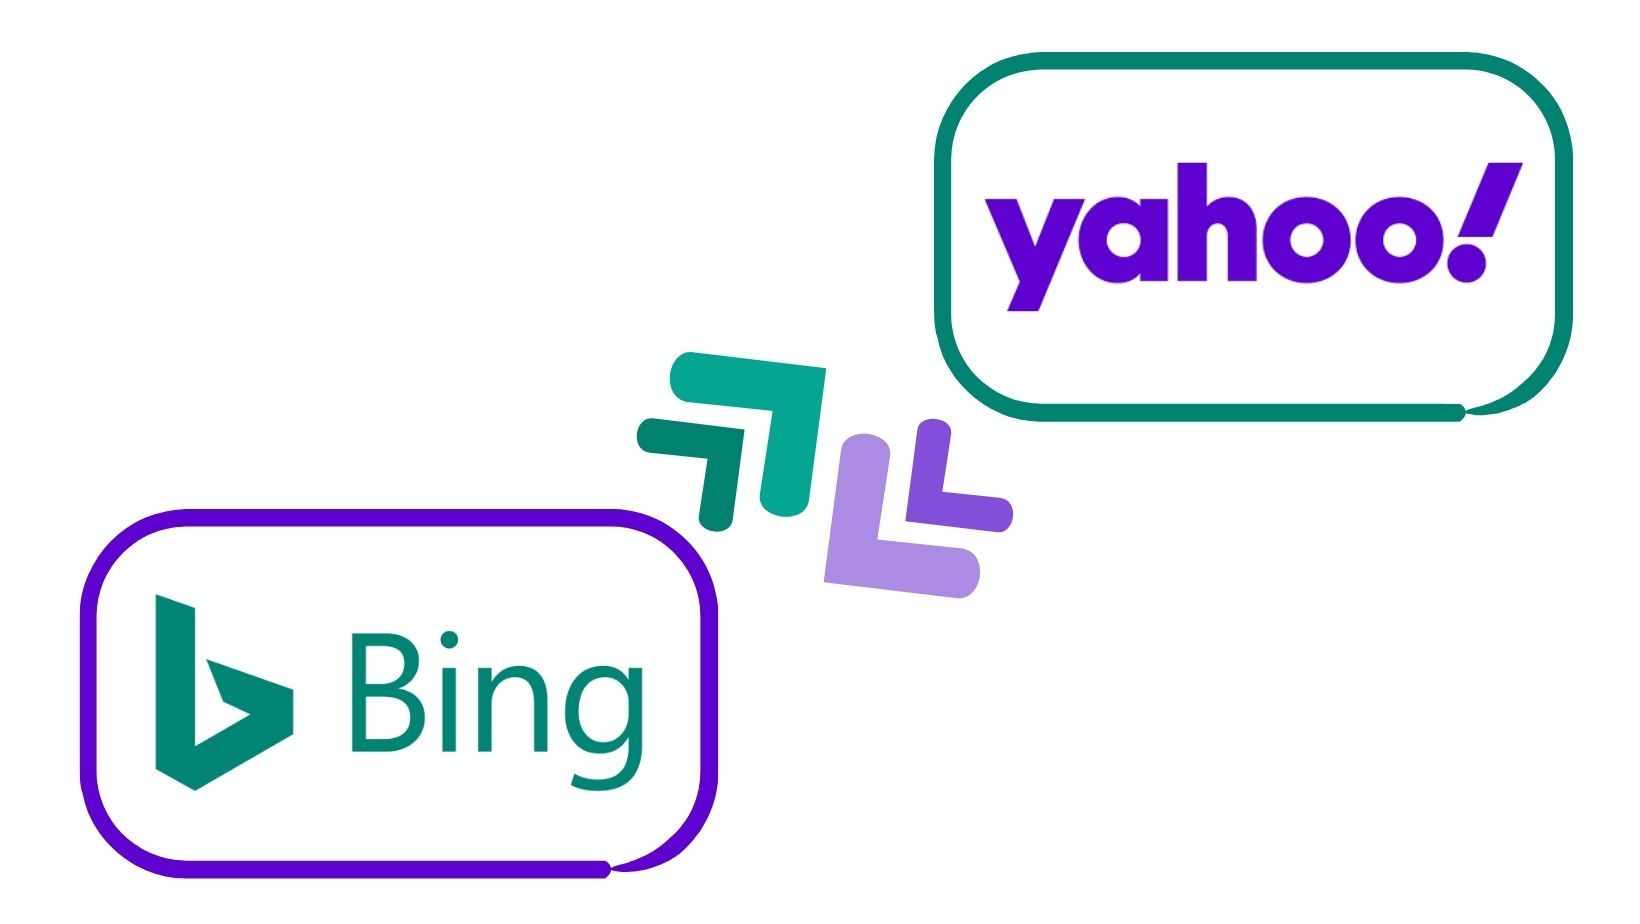 Yahoo and Bing's logos